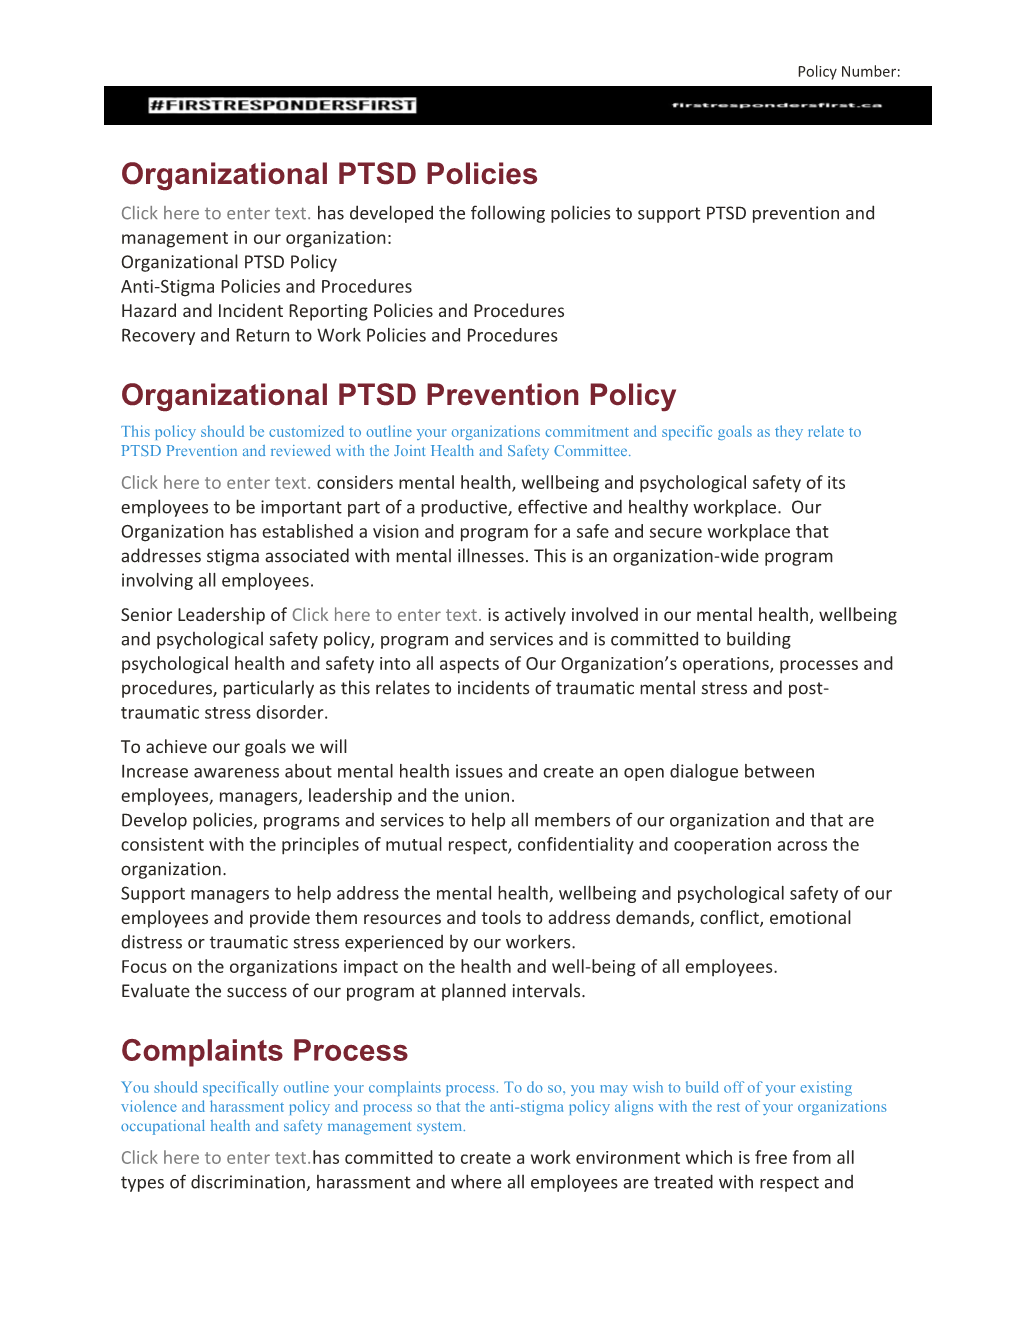 Organizational PTSD Policies